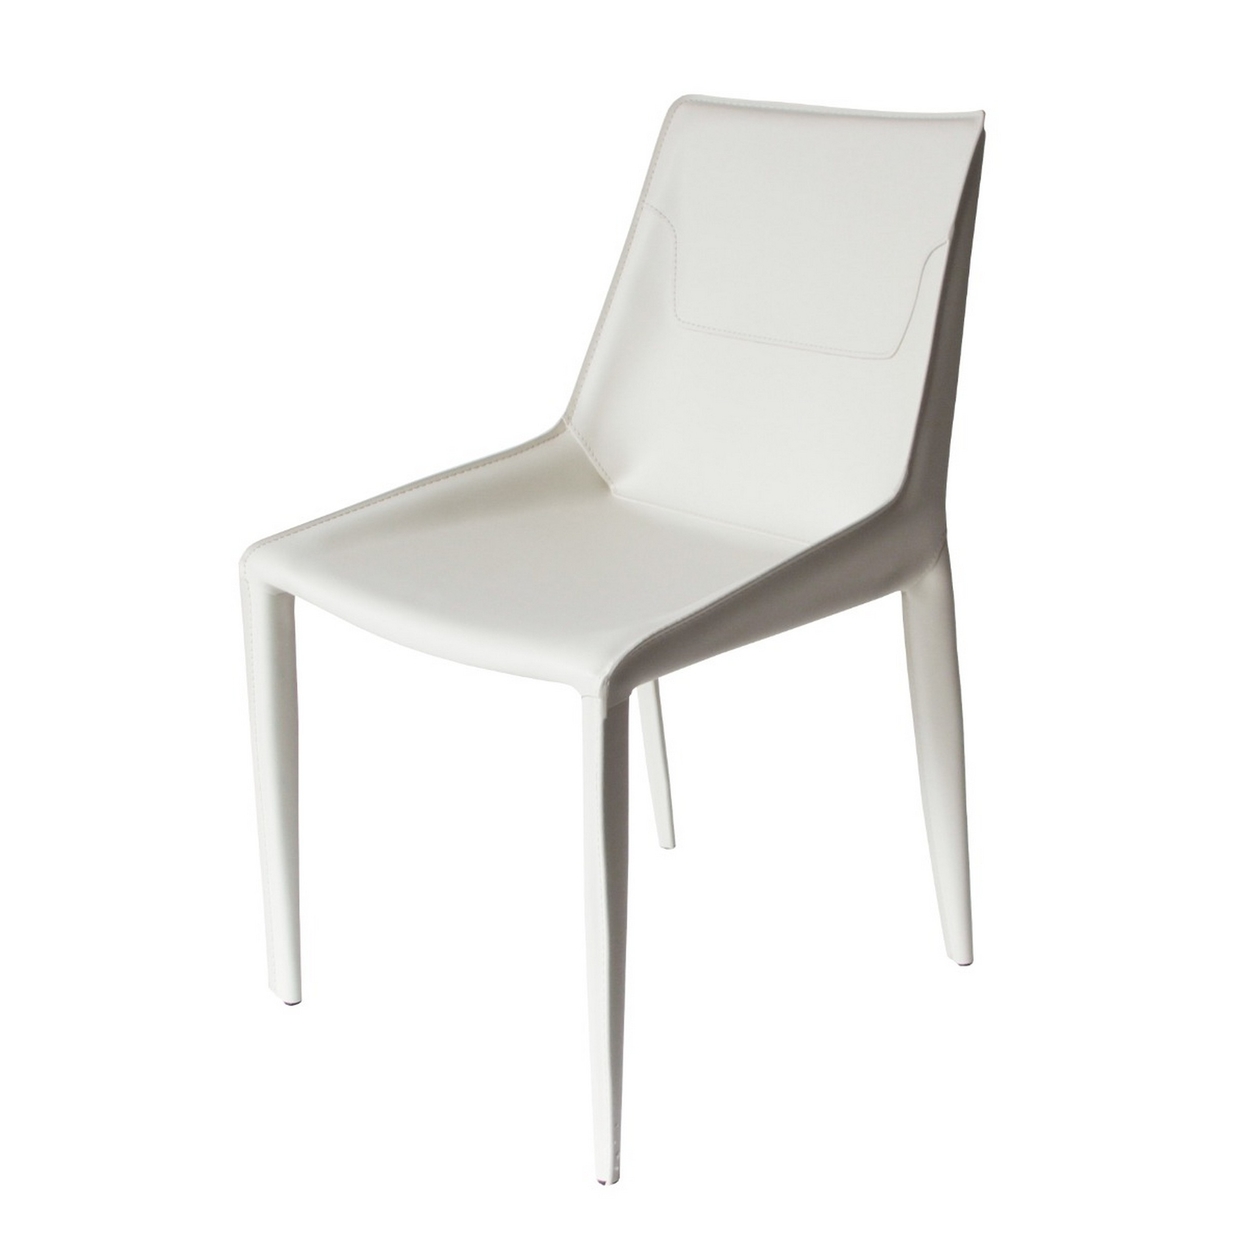 Cid Paz 18 Inch Dining Chair, Set Of 2, White Saddle Leather, Iron Frame- Saltoro Sherpi